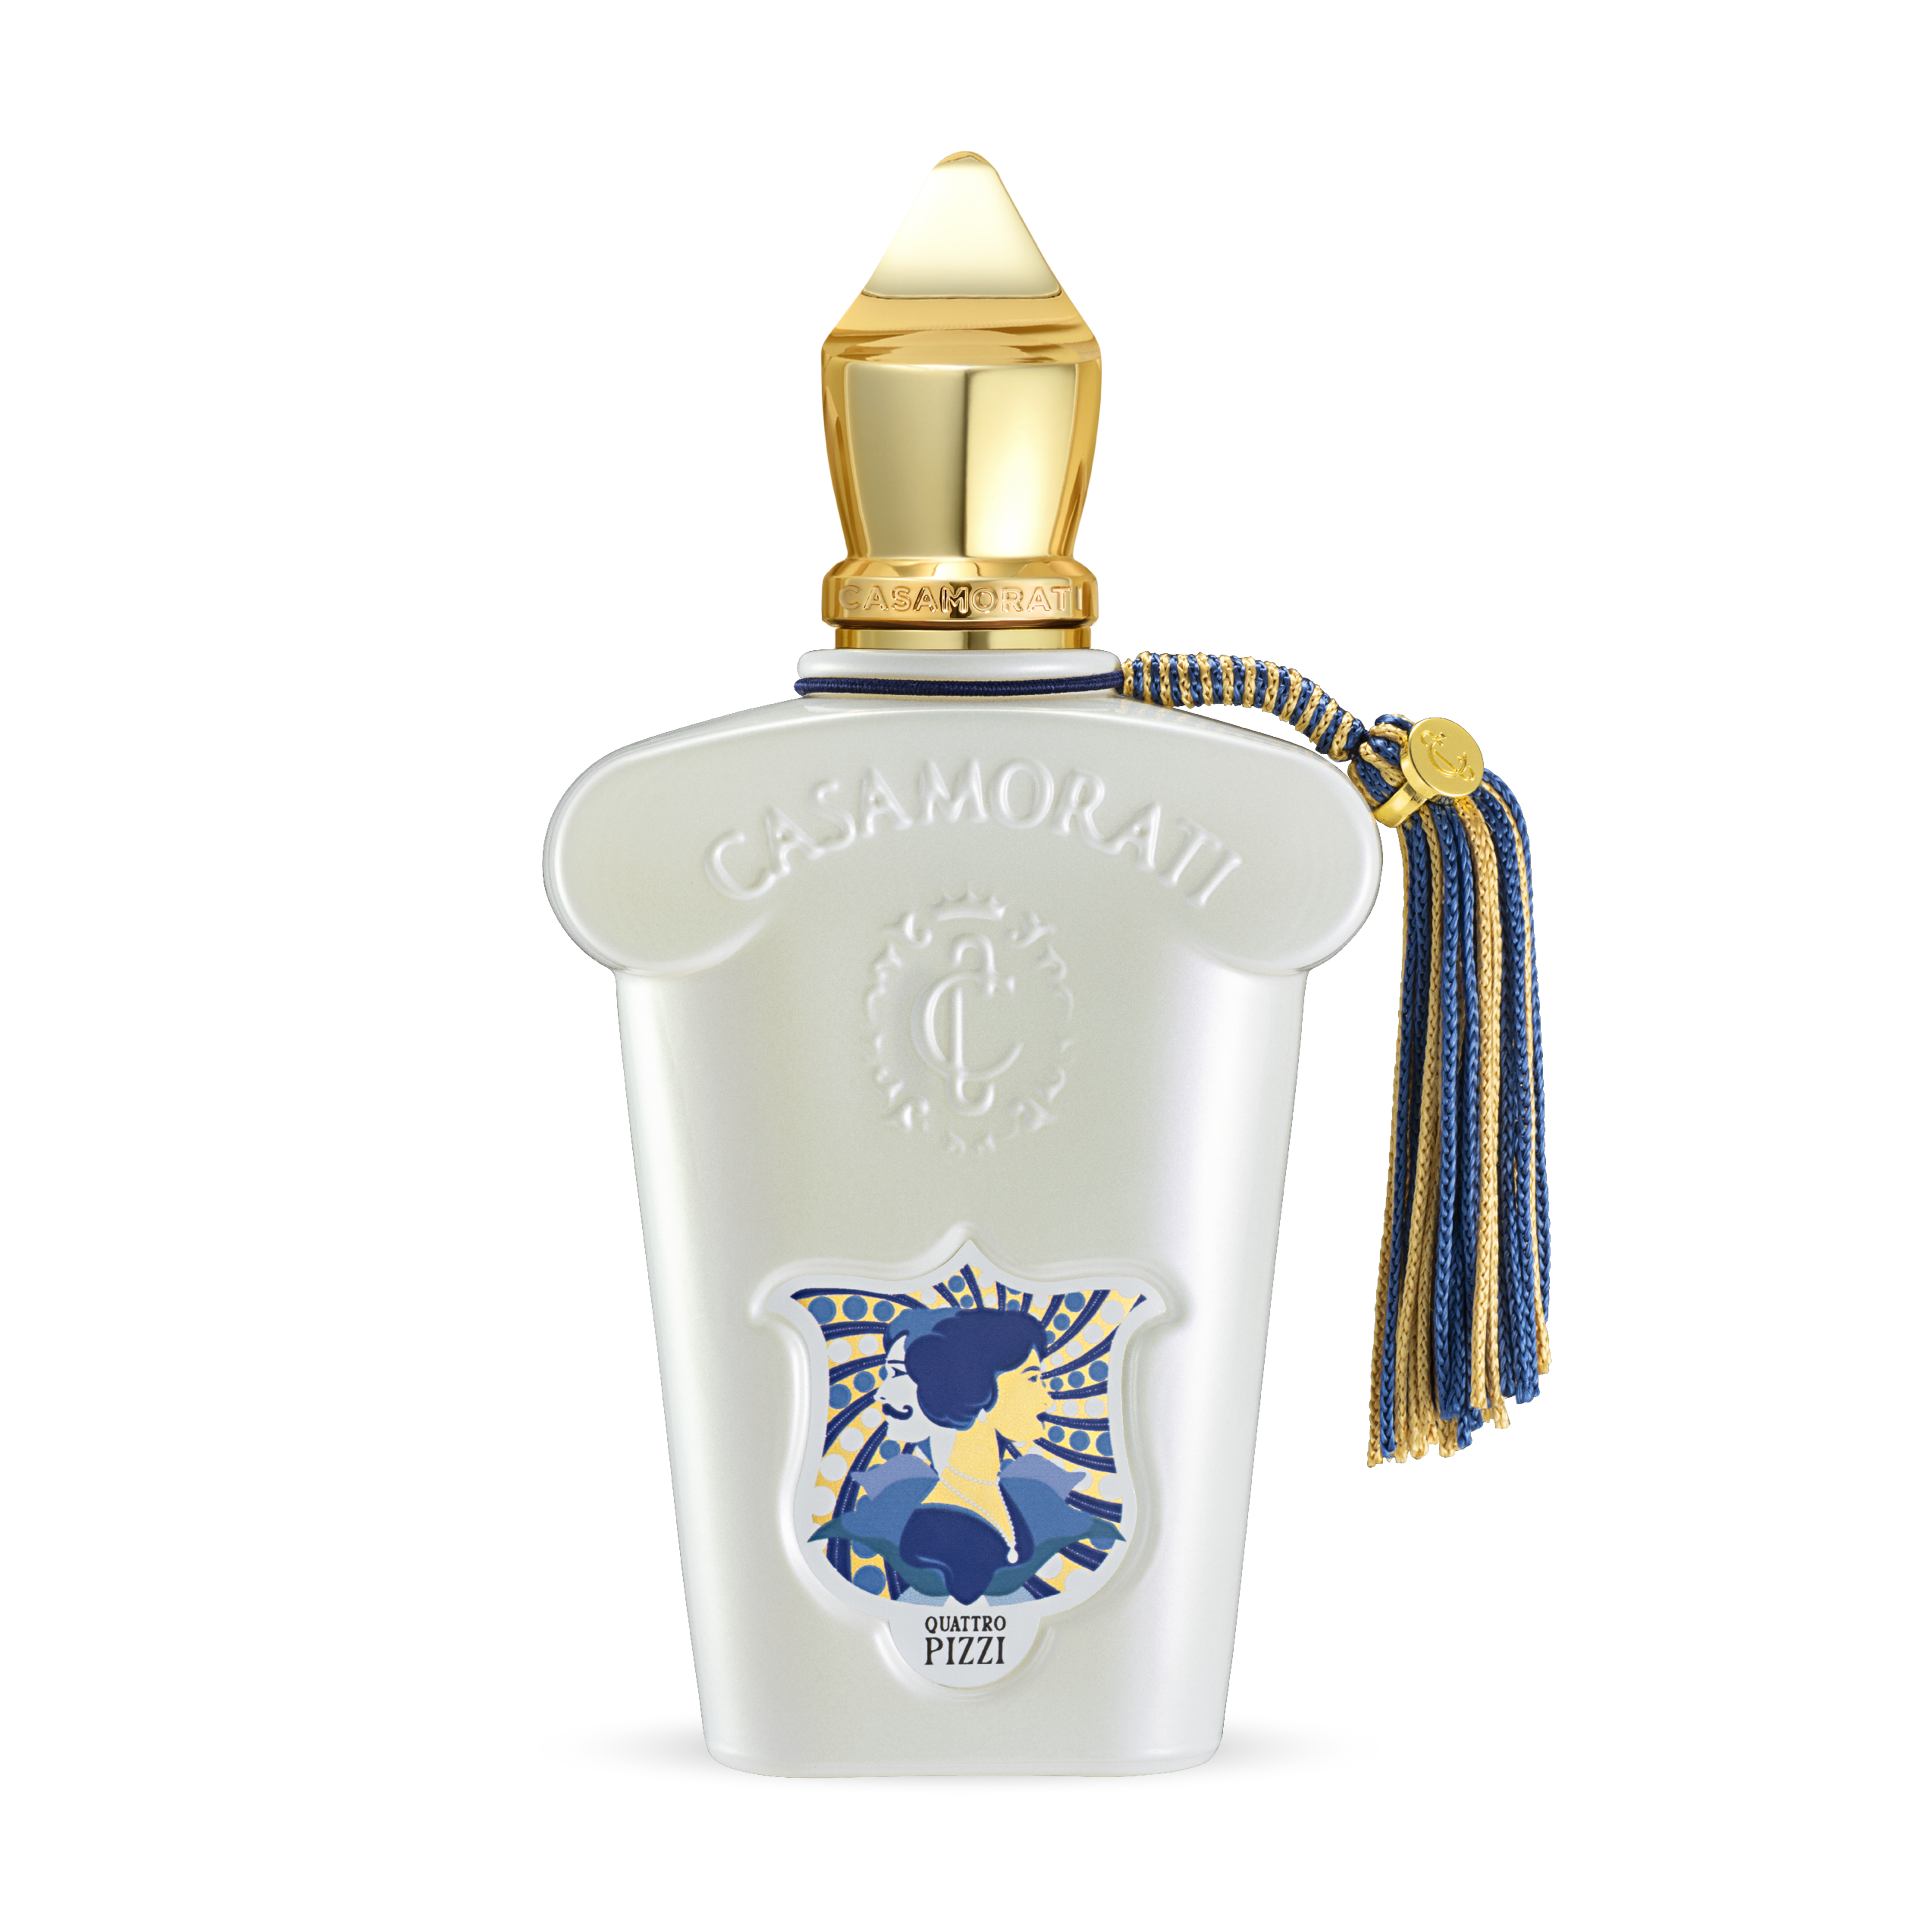 CASAMORATI - AAFKES│distributie van exclusieve parfums